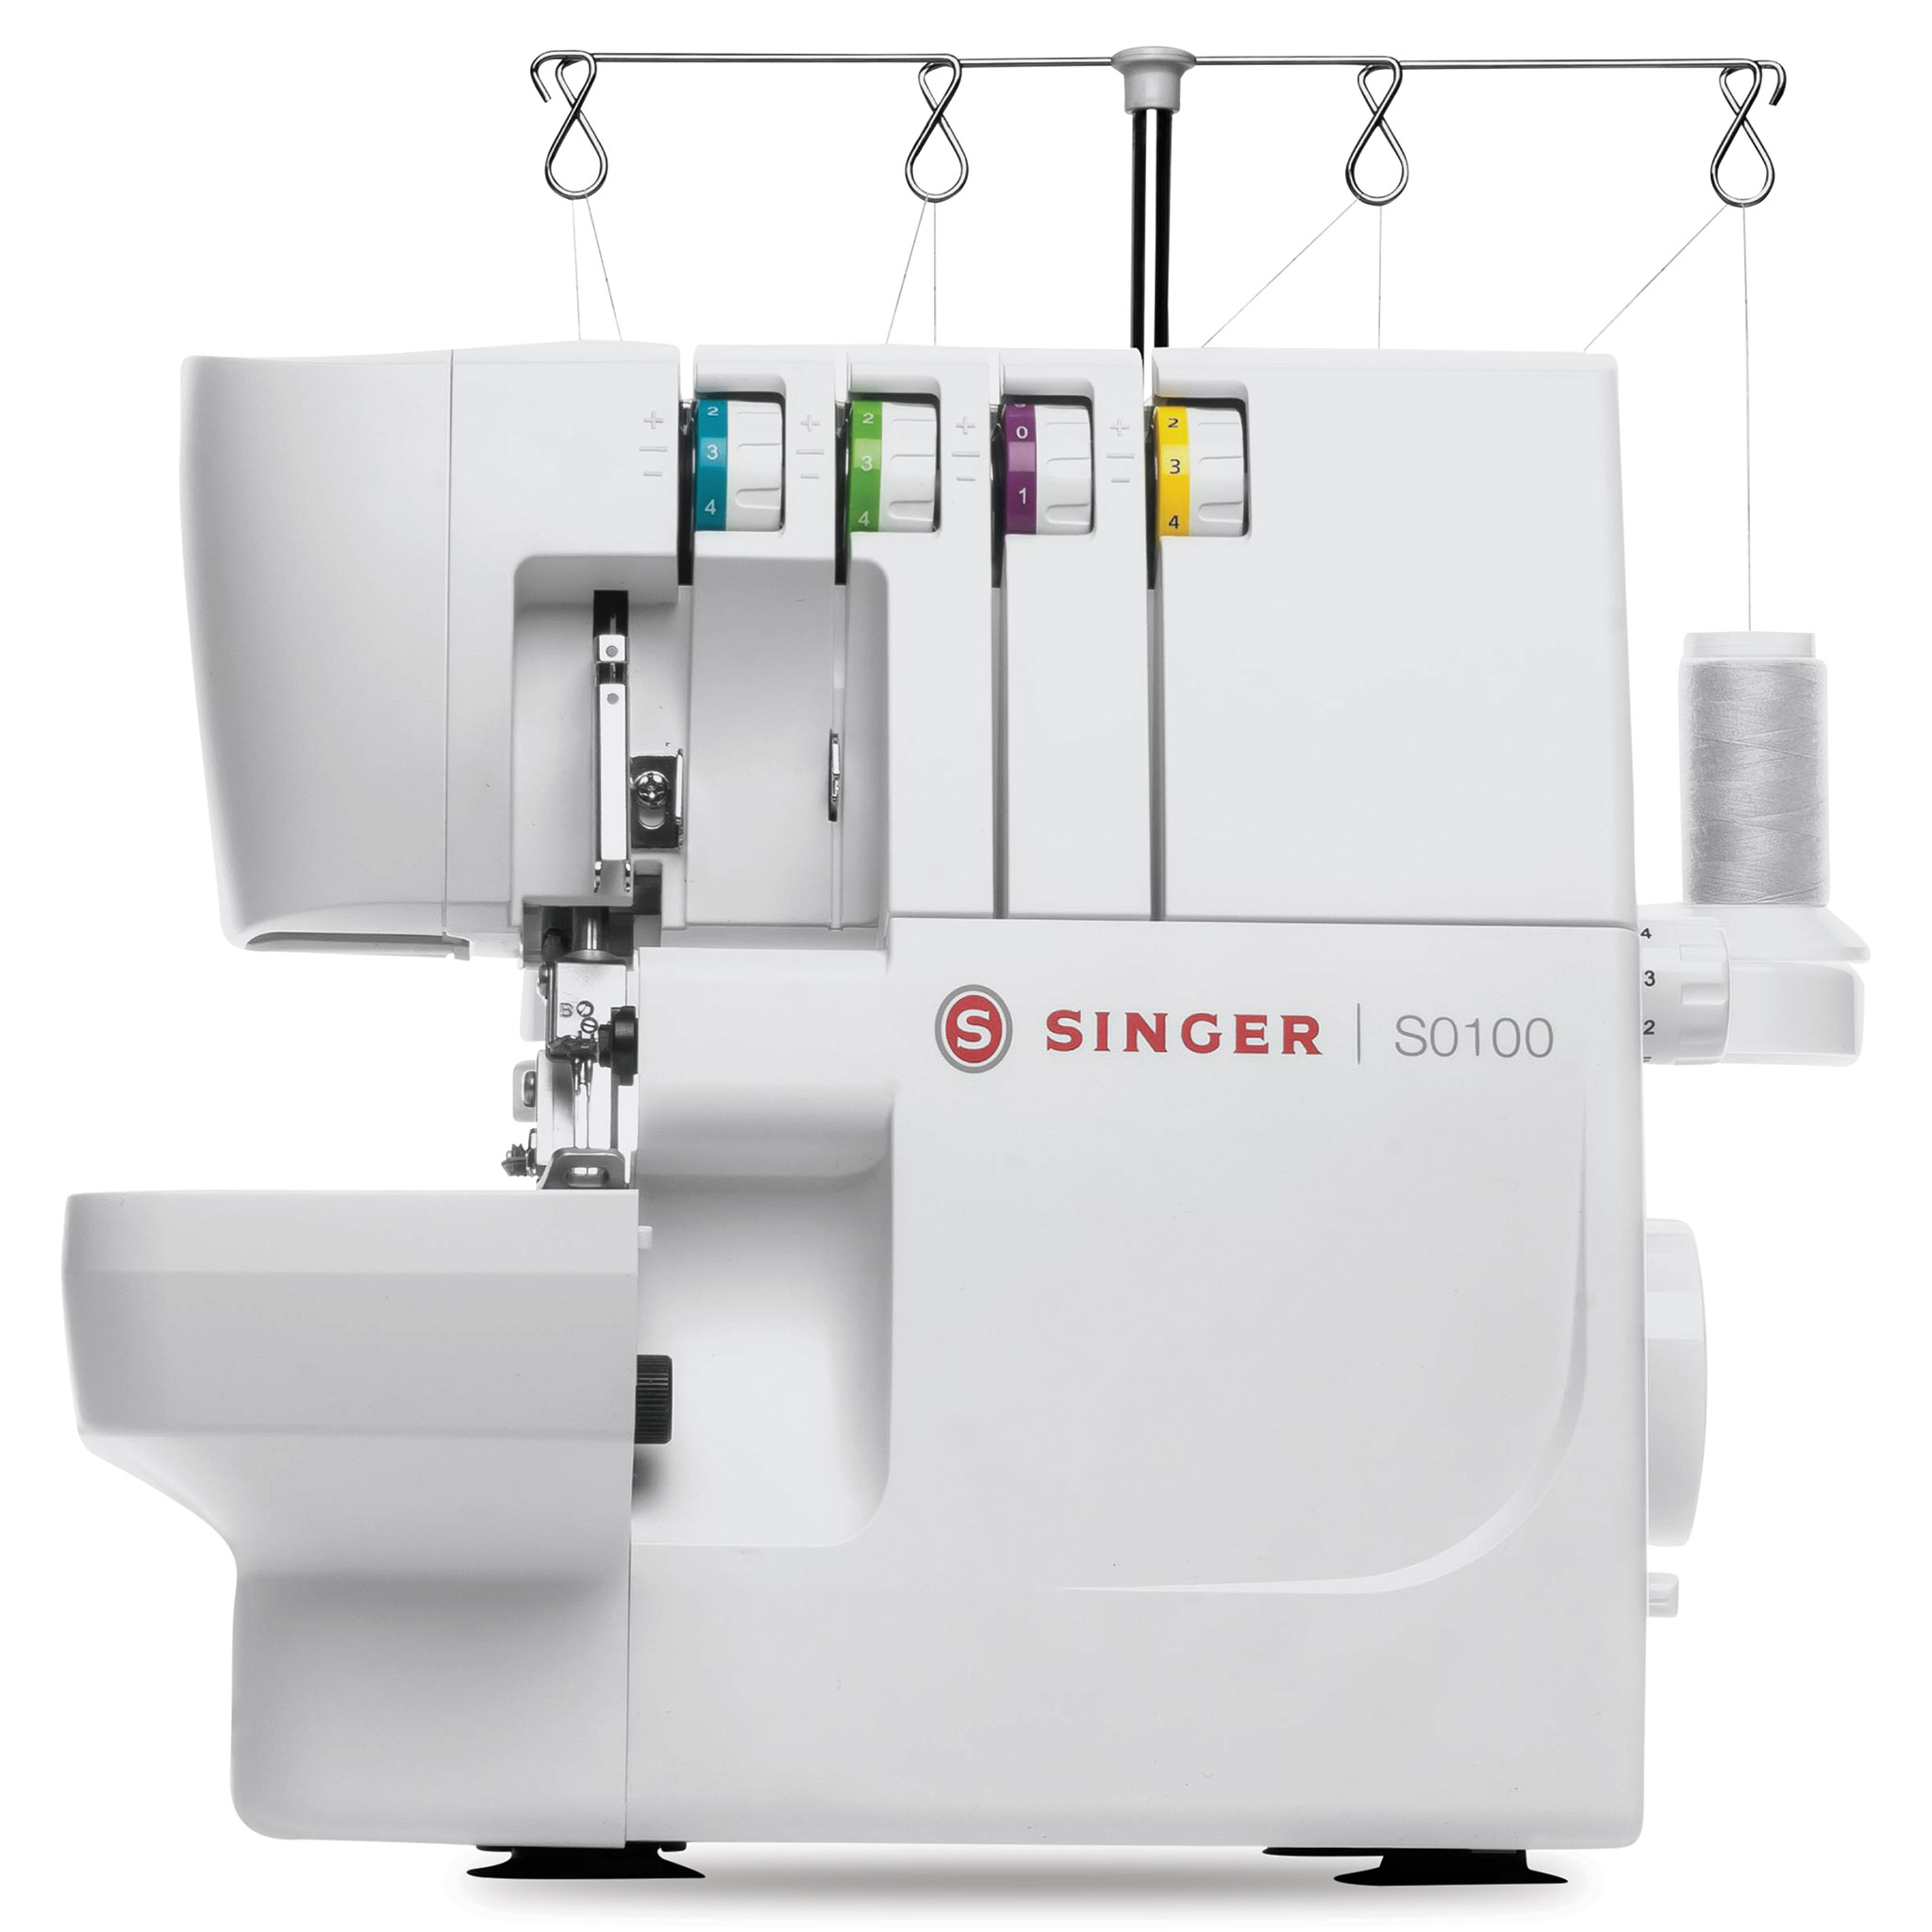 SINGER Industrial Sewing Machine Oil - 1 Liter (33.8 Oz.) All